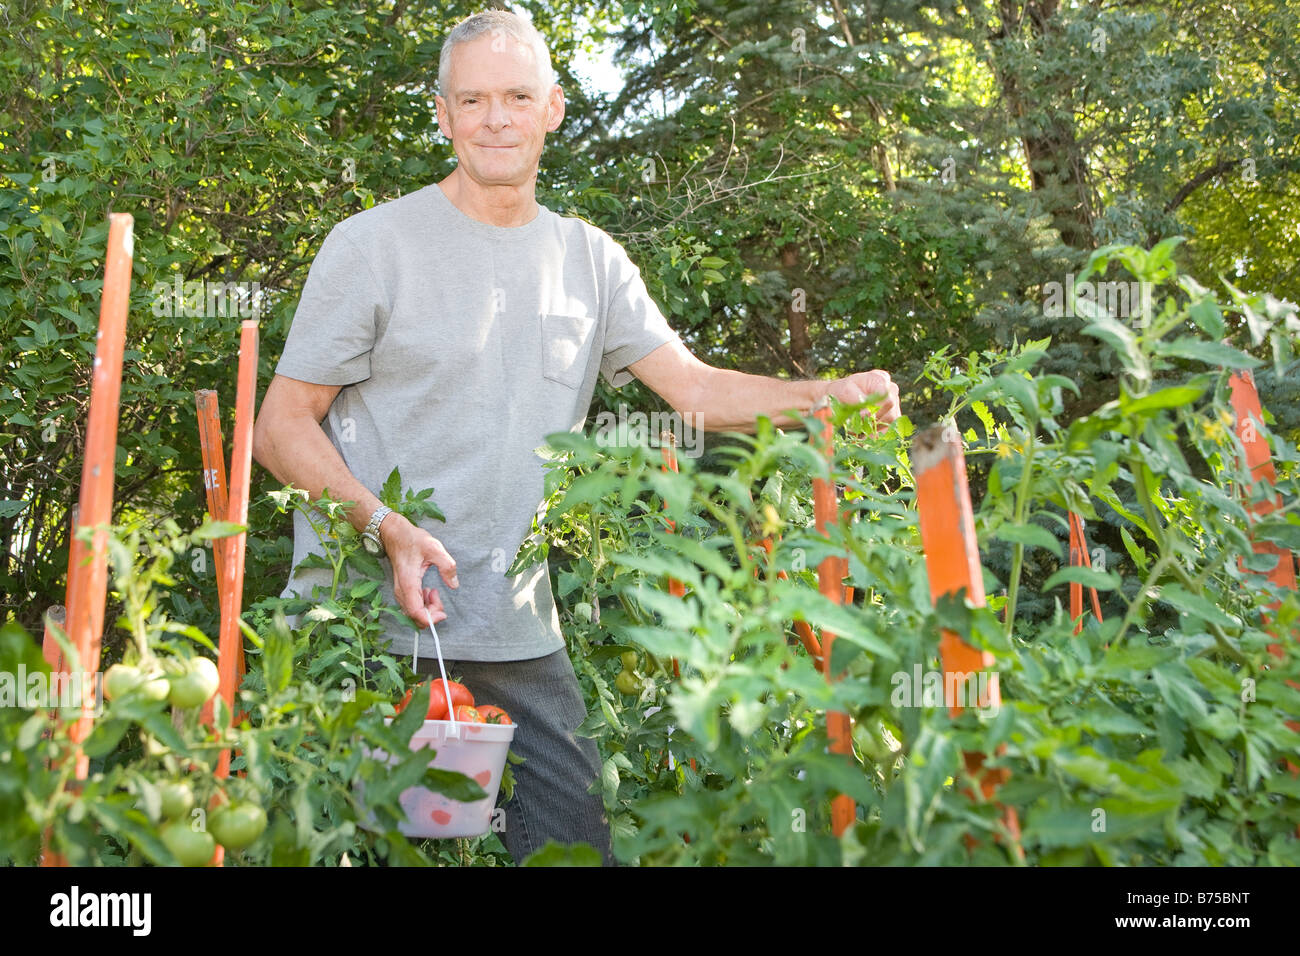 Senior man with tomatoes in garden, Winnipeg, Canada Stock Photo